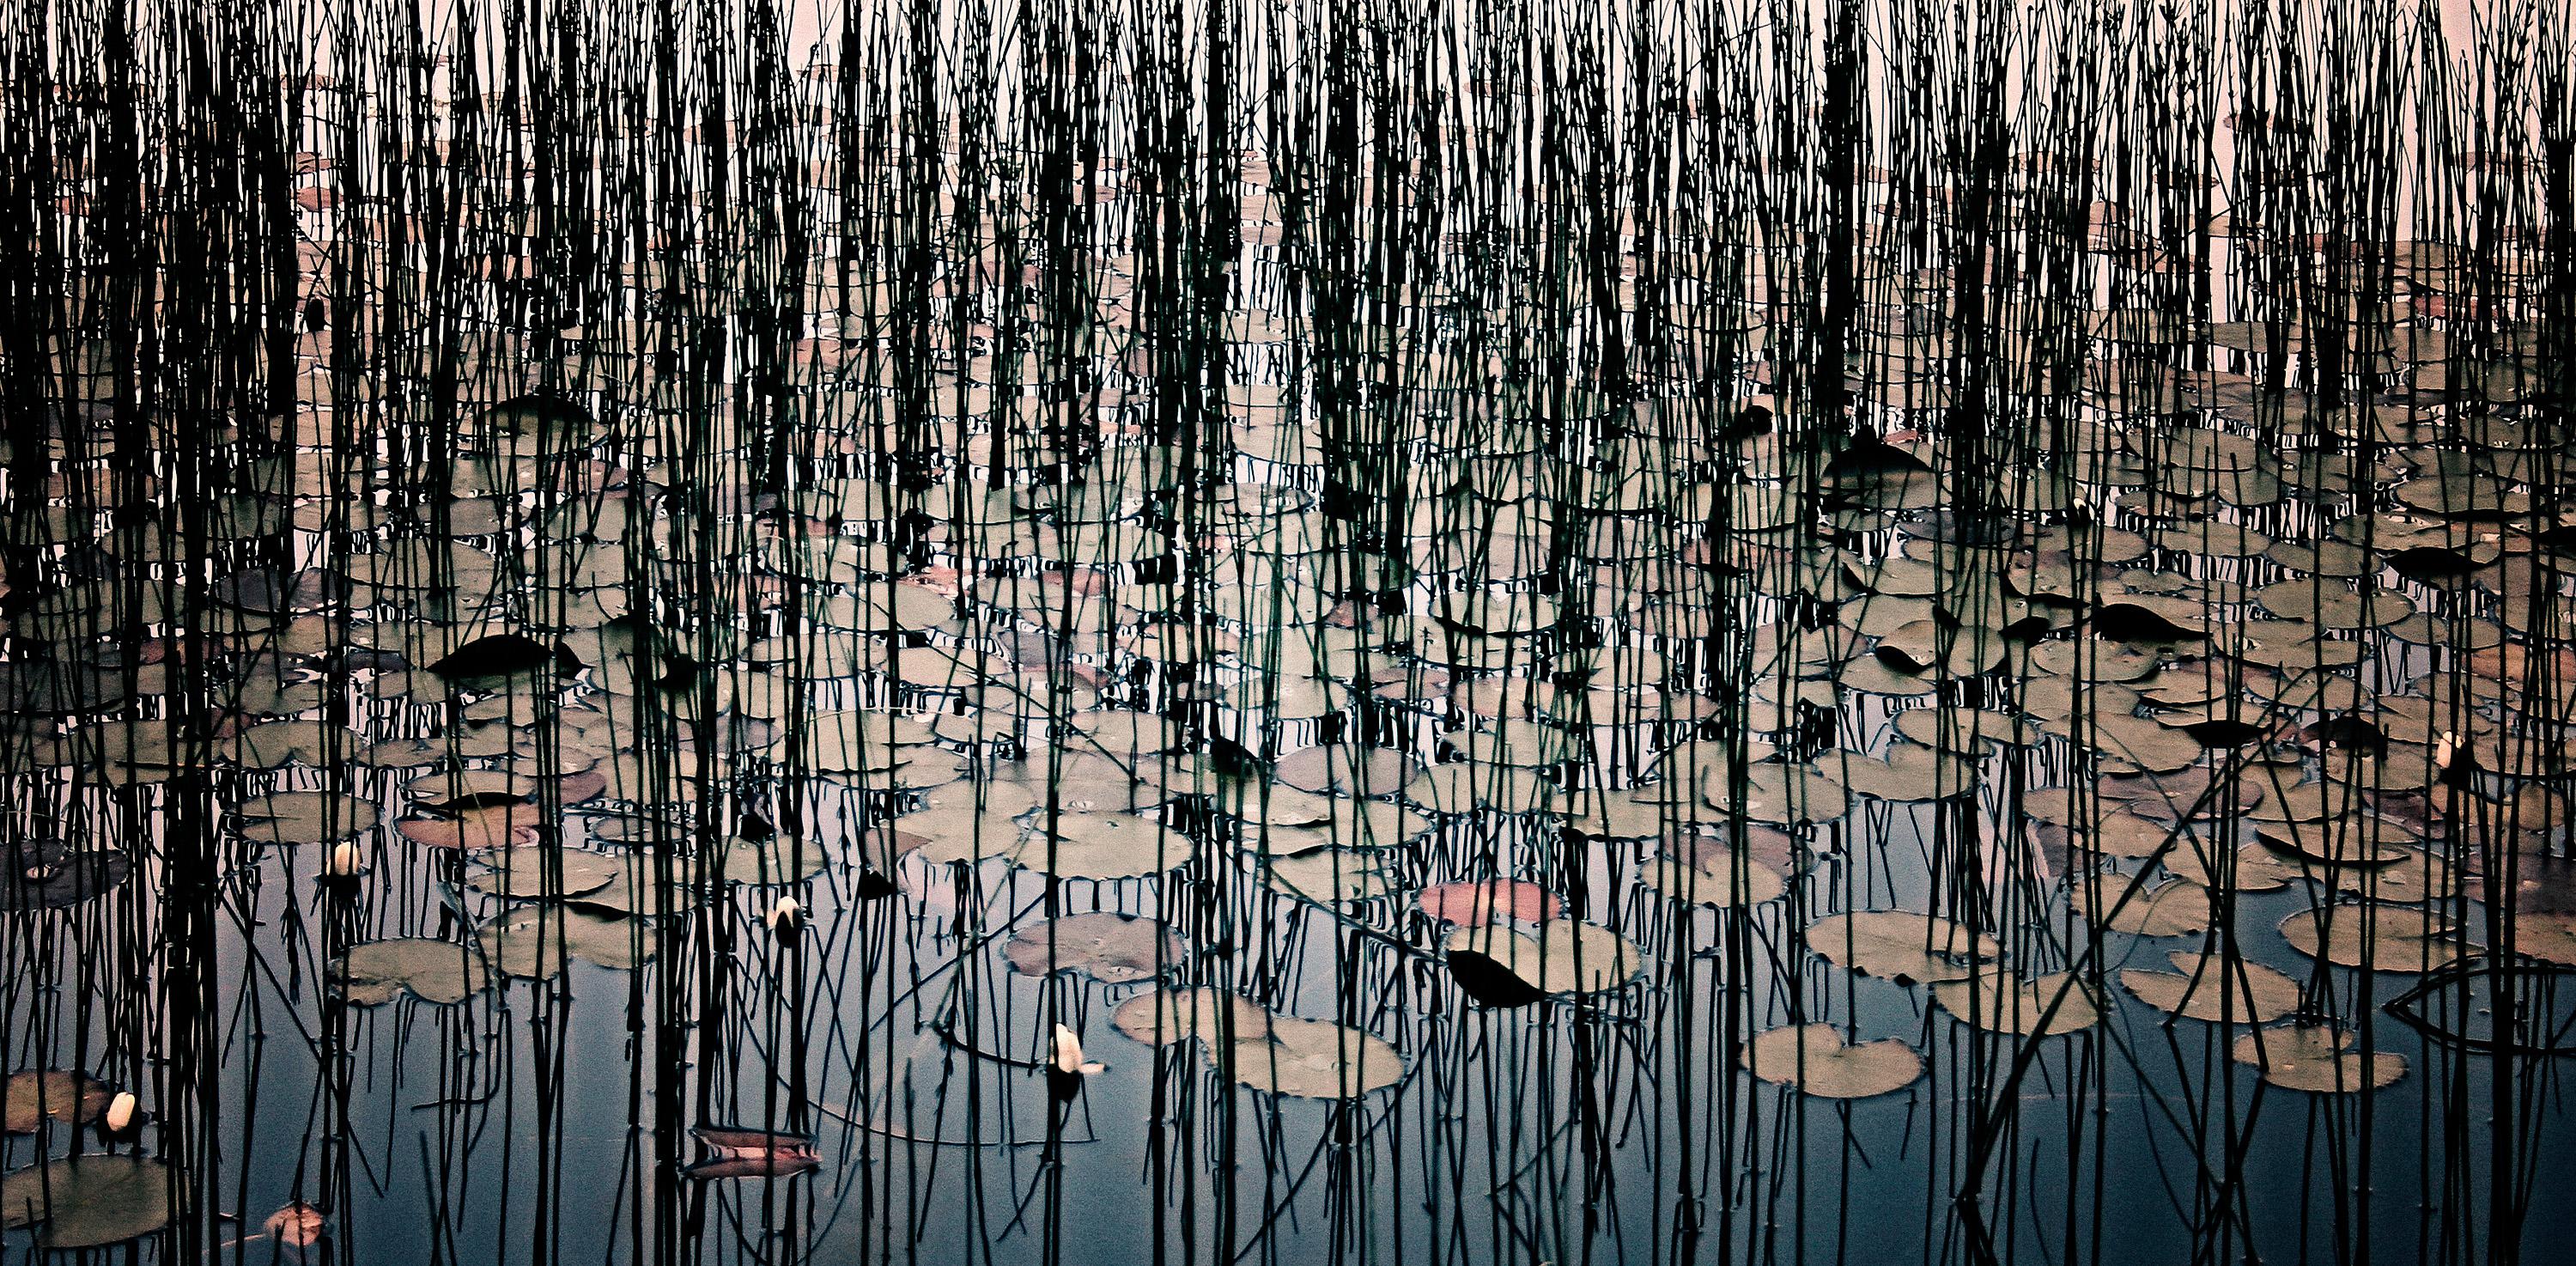 Lillies - Morgan Silk, Contemporary Photography, Flowers, Nature, Reeds